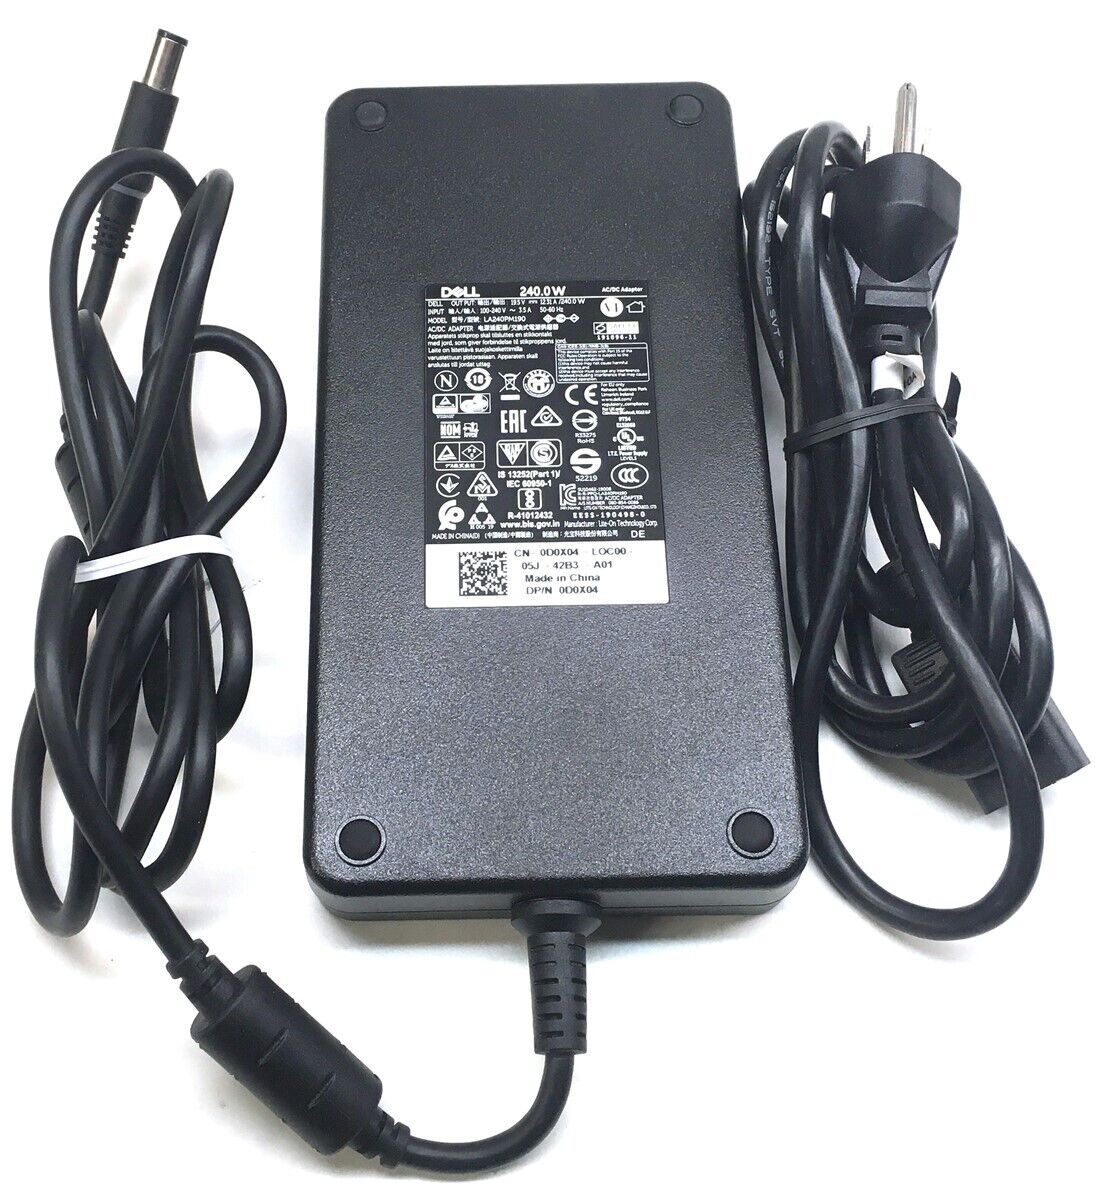 *Brand NEW*Genuine Dell LA240PM190 0D0X04 19.5V 240W AC Adapter Power Supply - Click Image to Close